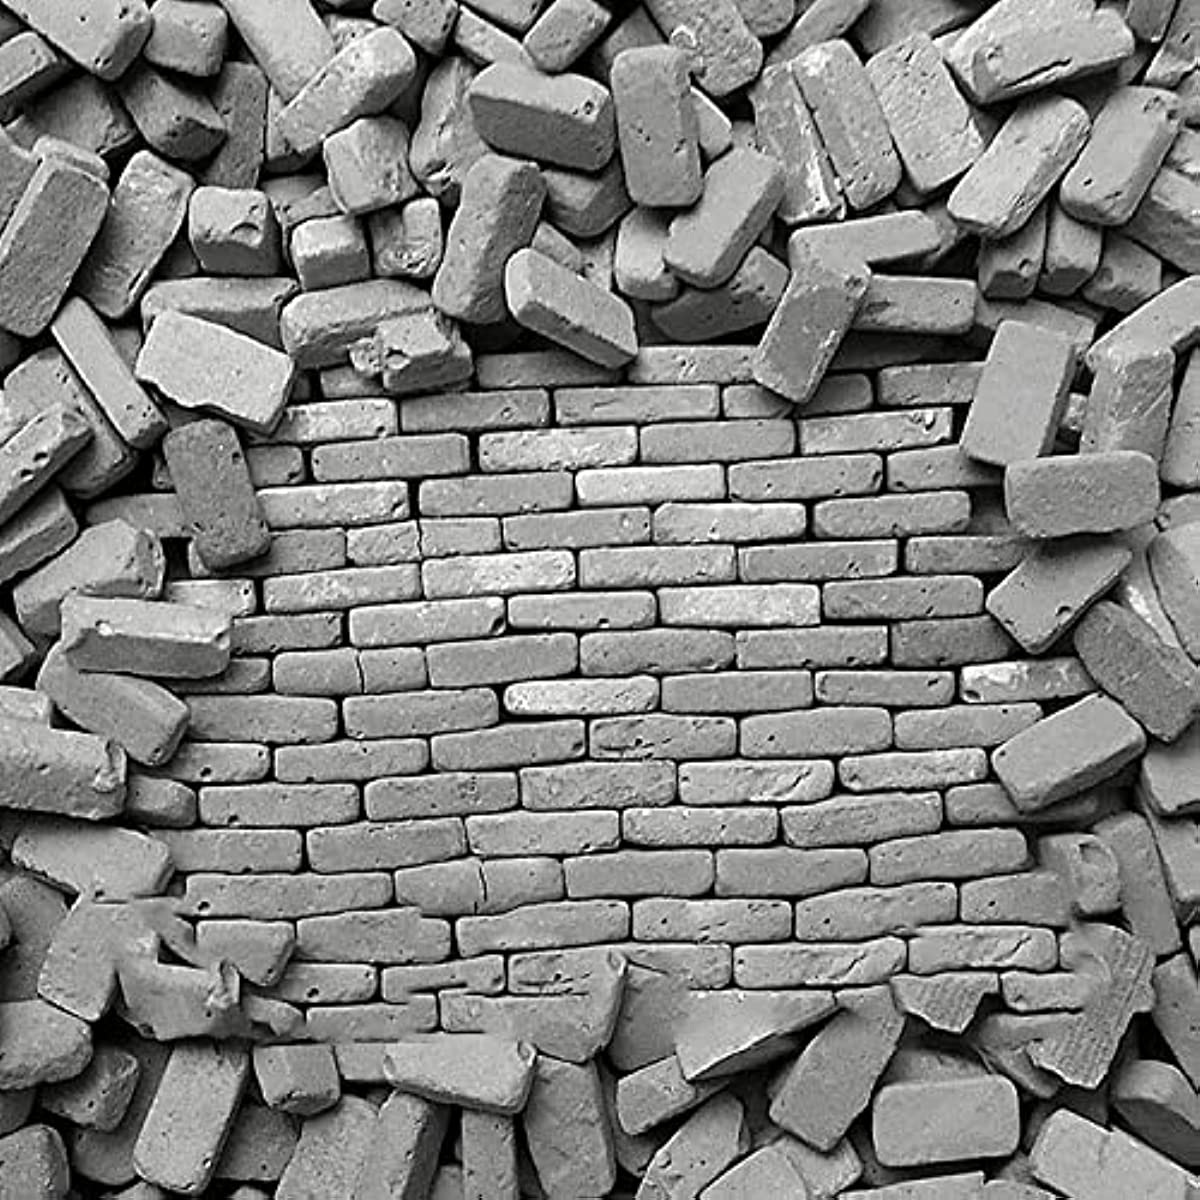 Mini Bricks For Landscaping Small Bricks Miniature Bricks Model Brick Wall  Crafts Realistic Fake Bricks Mini Building Blocks For Dollhouse Miniature  Garden Accessories DIY Miniature Model Building